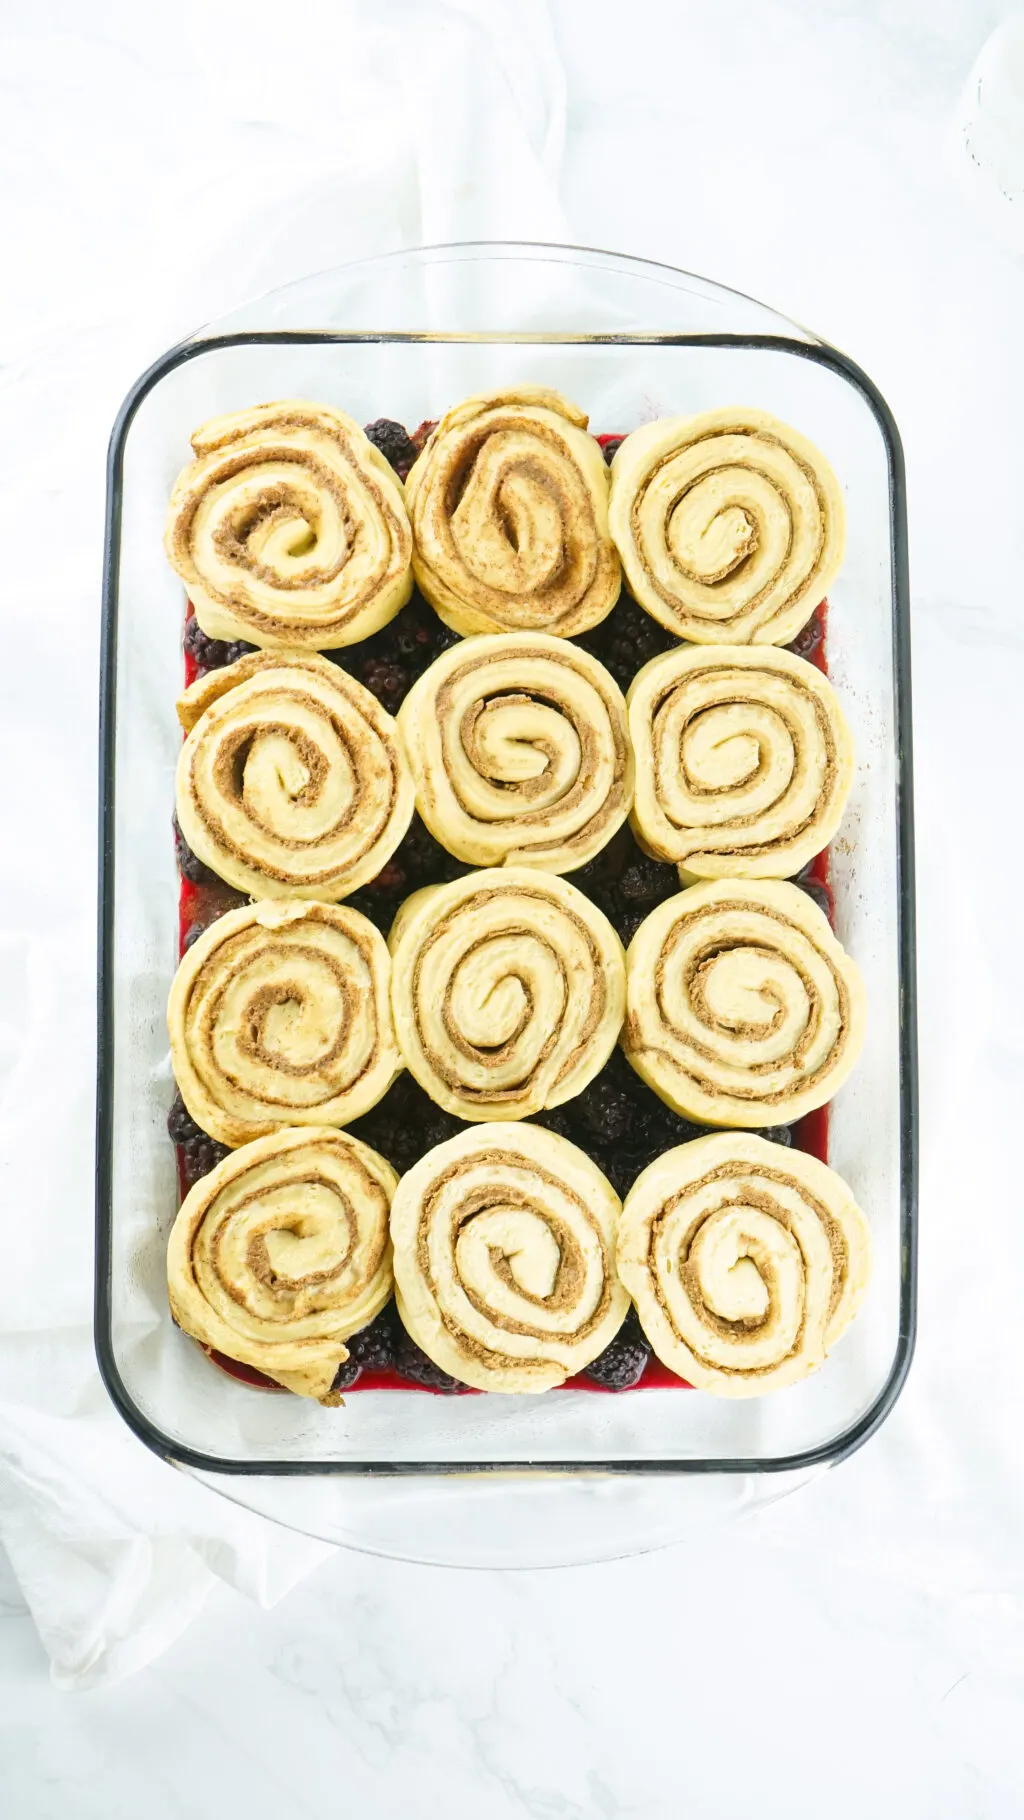 cinnamon rolls in a baking dish